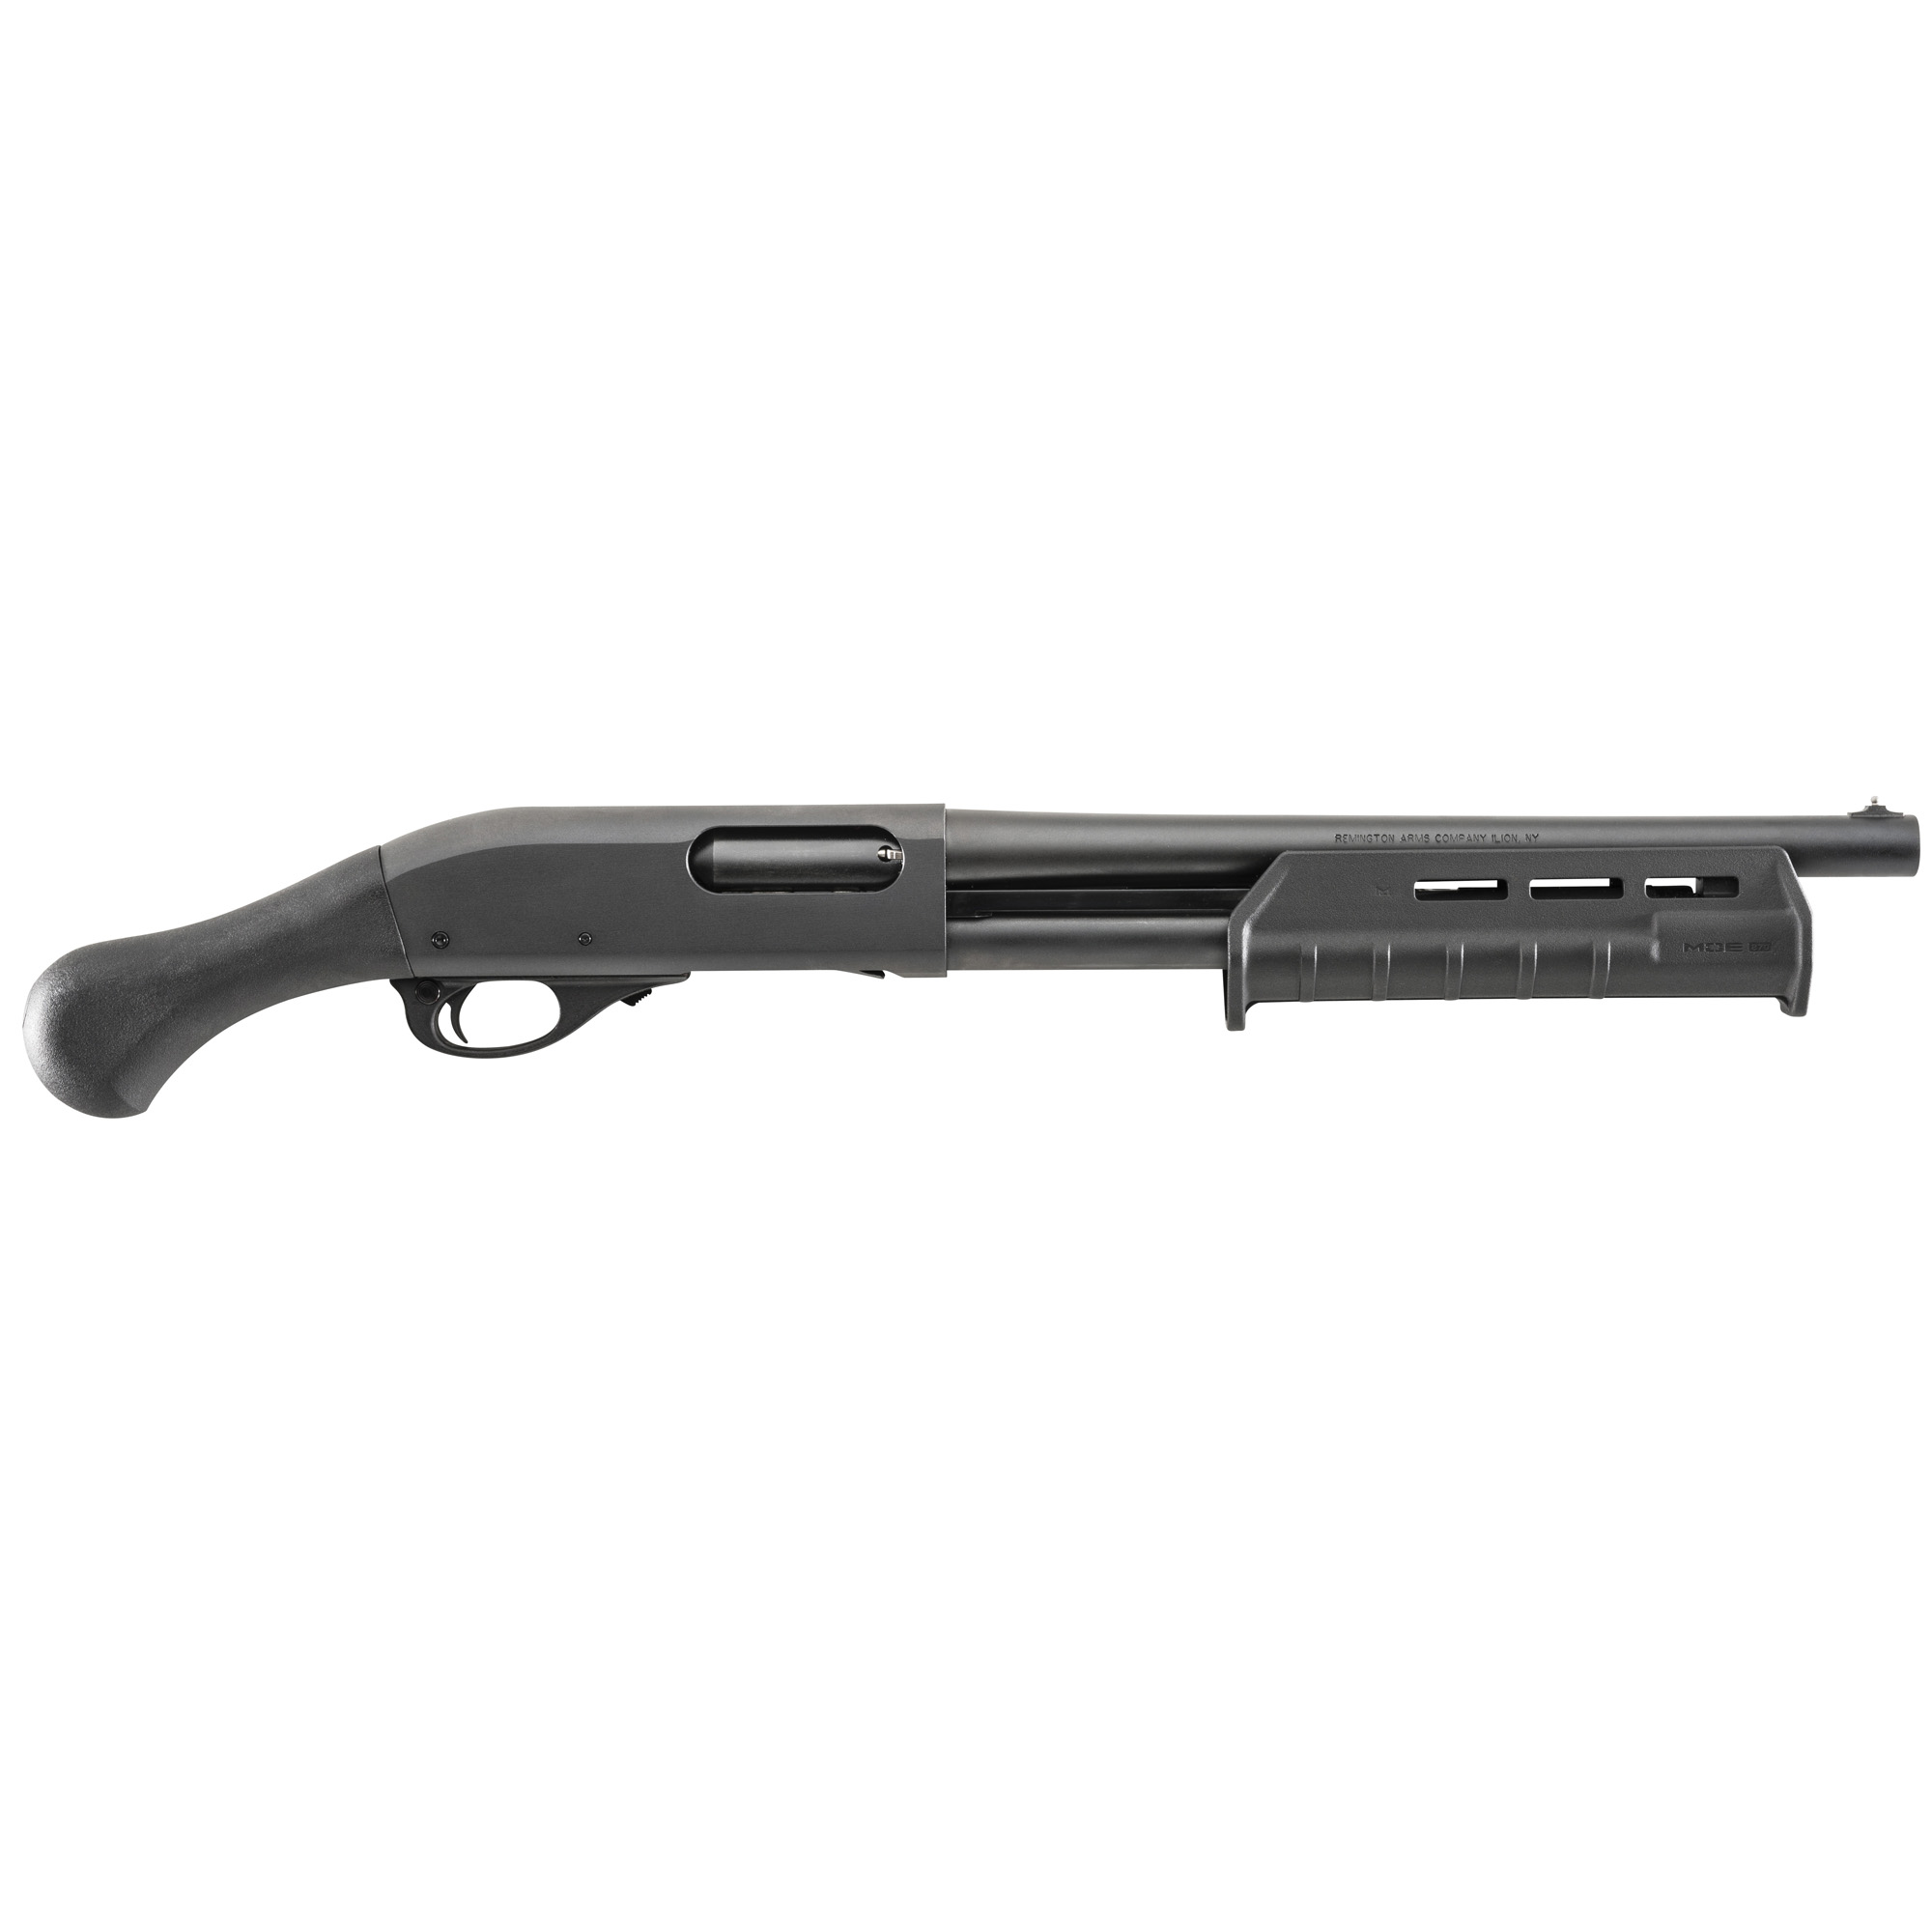 Remington 870 Tac-14, 12Ga. Pump Shotgun, Black (R81230)